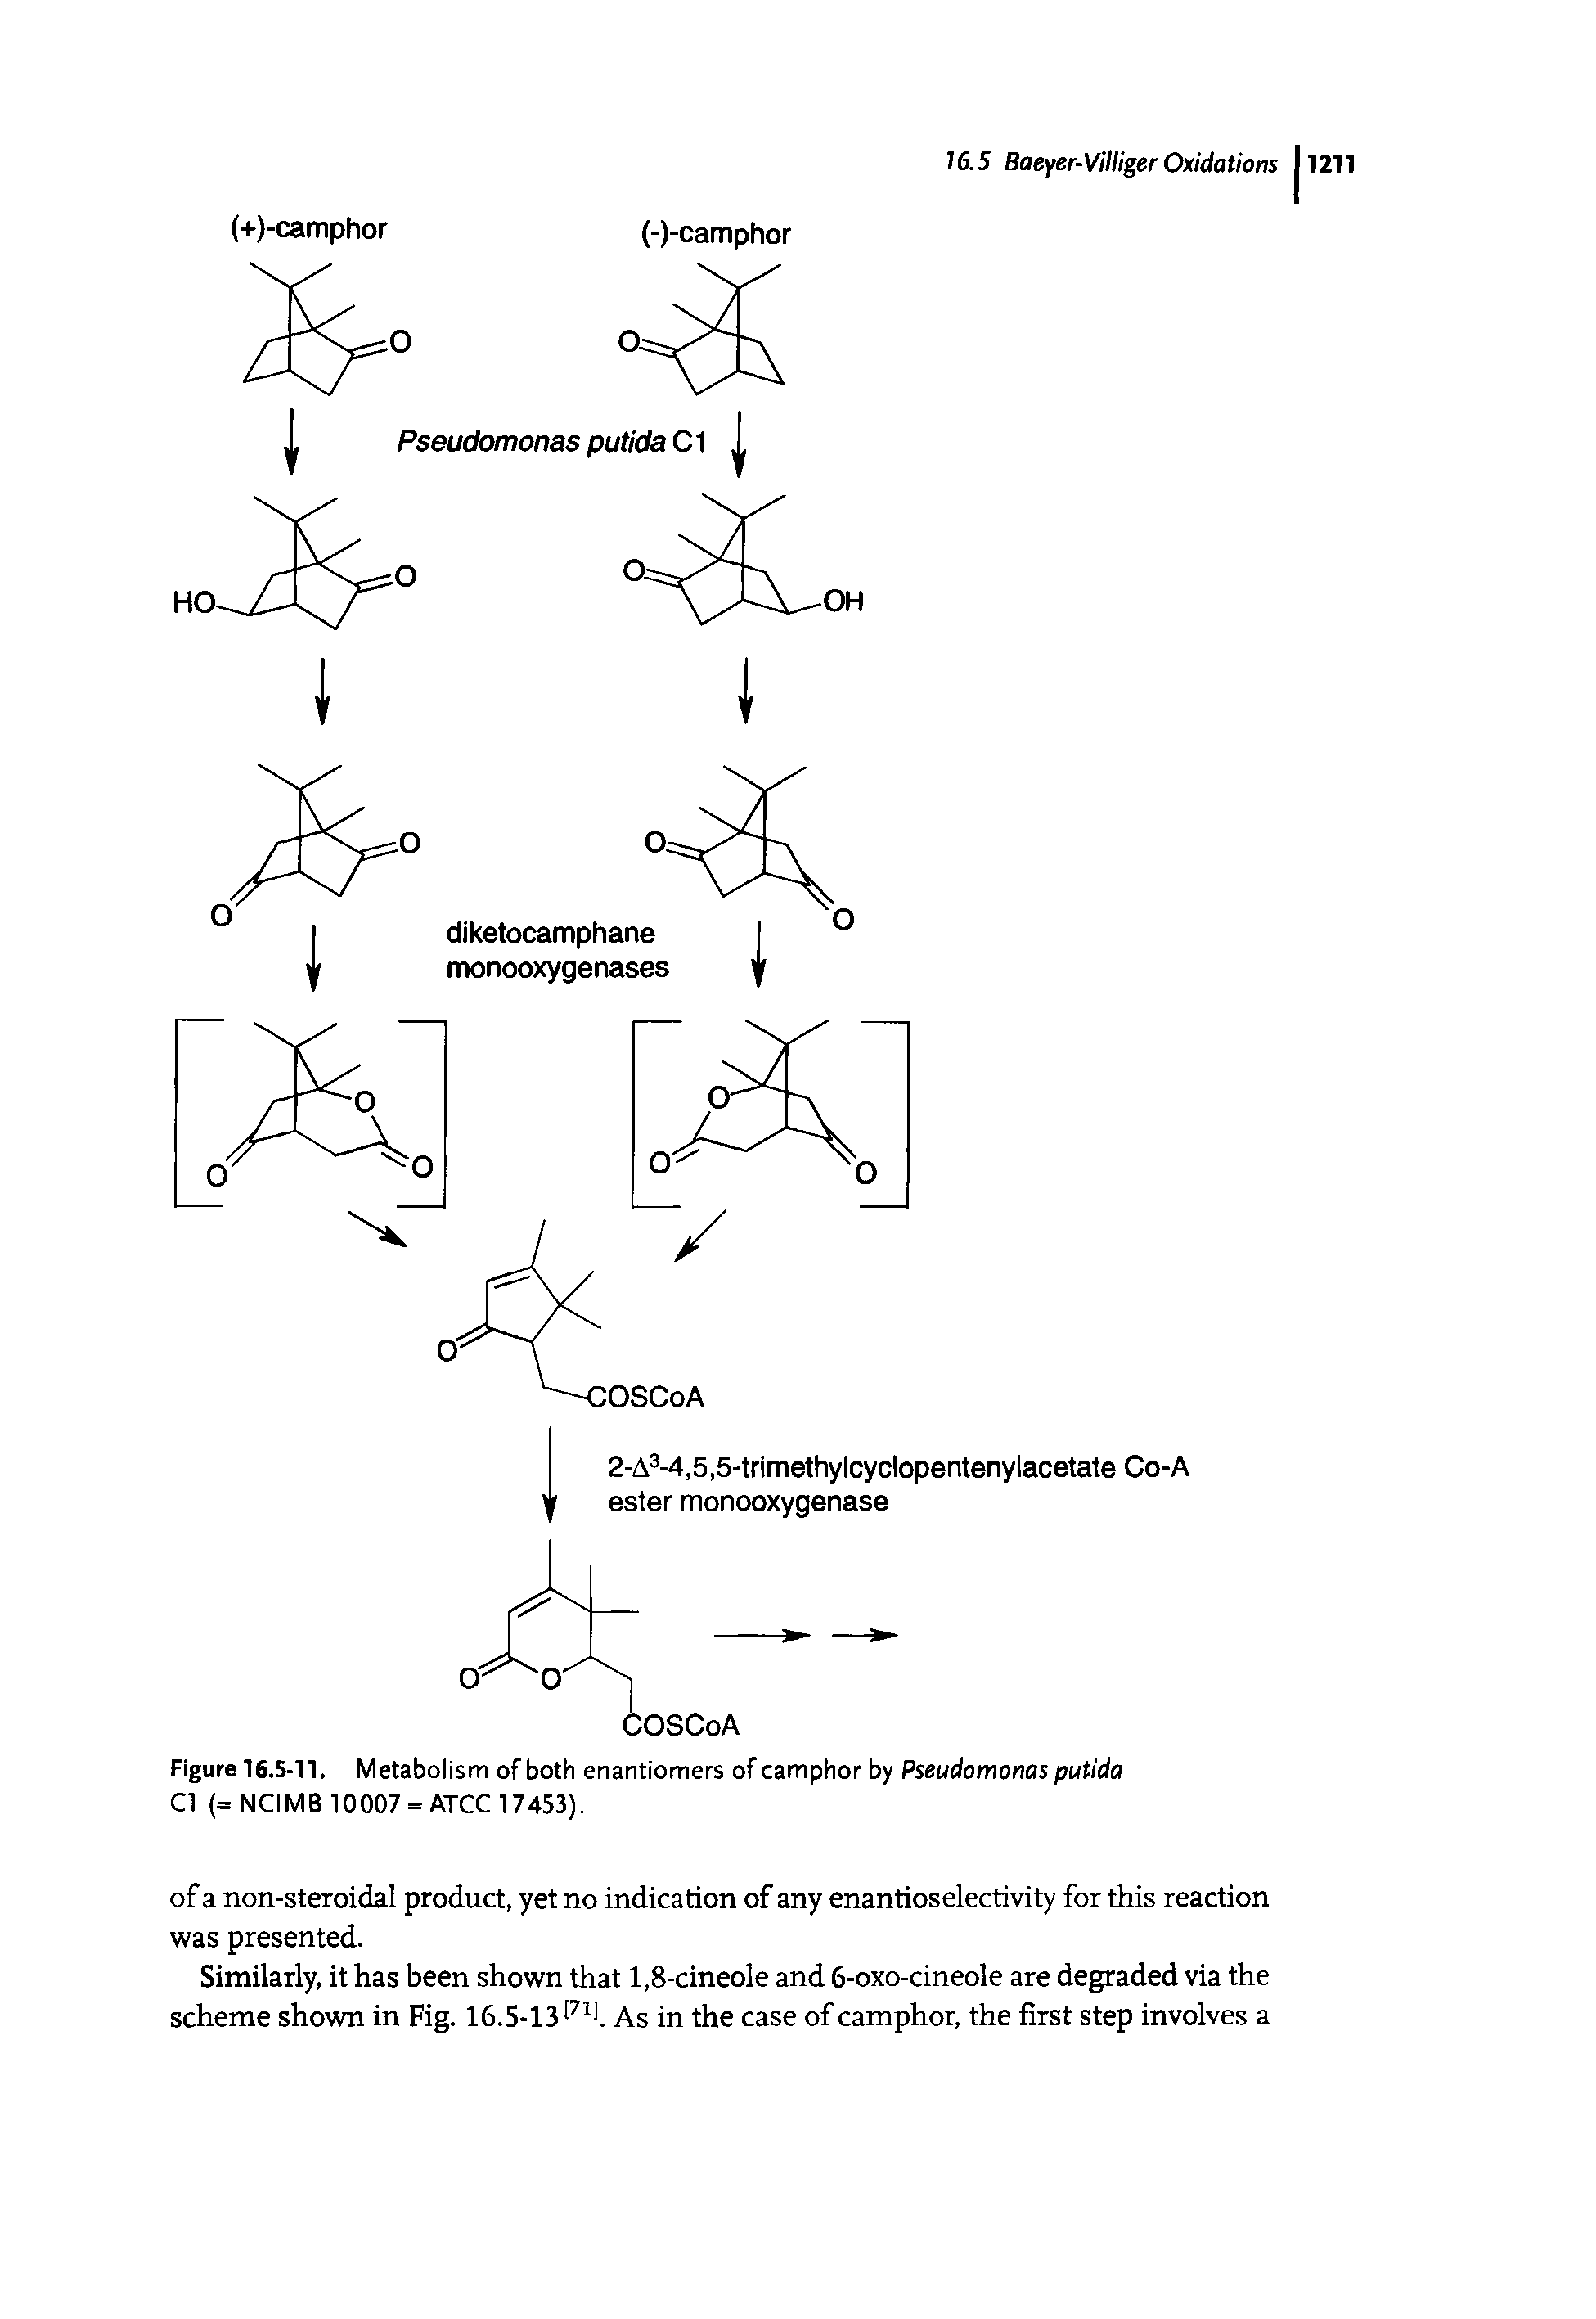 Figure 16.5-11. Metabolism of both enantiomers of camphor by Pseudomonas putida Cl (=NCIMB 10007 = ATCC 17453).